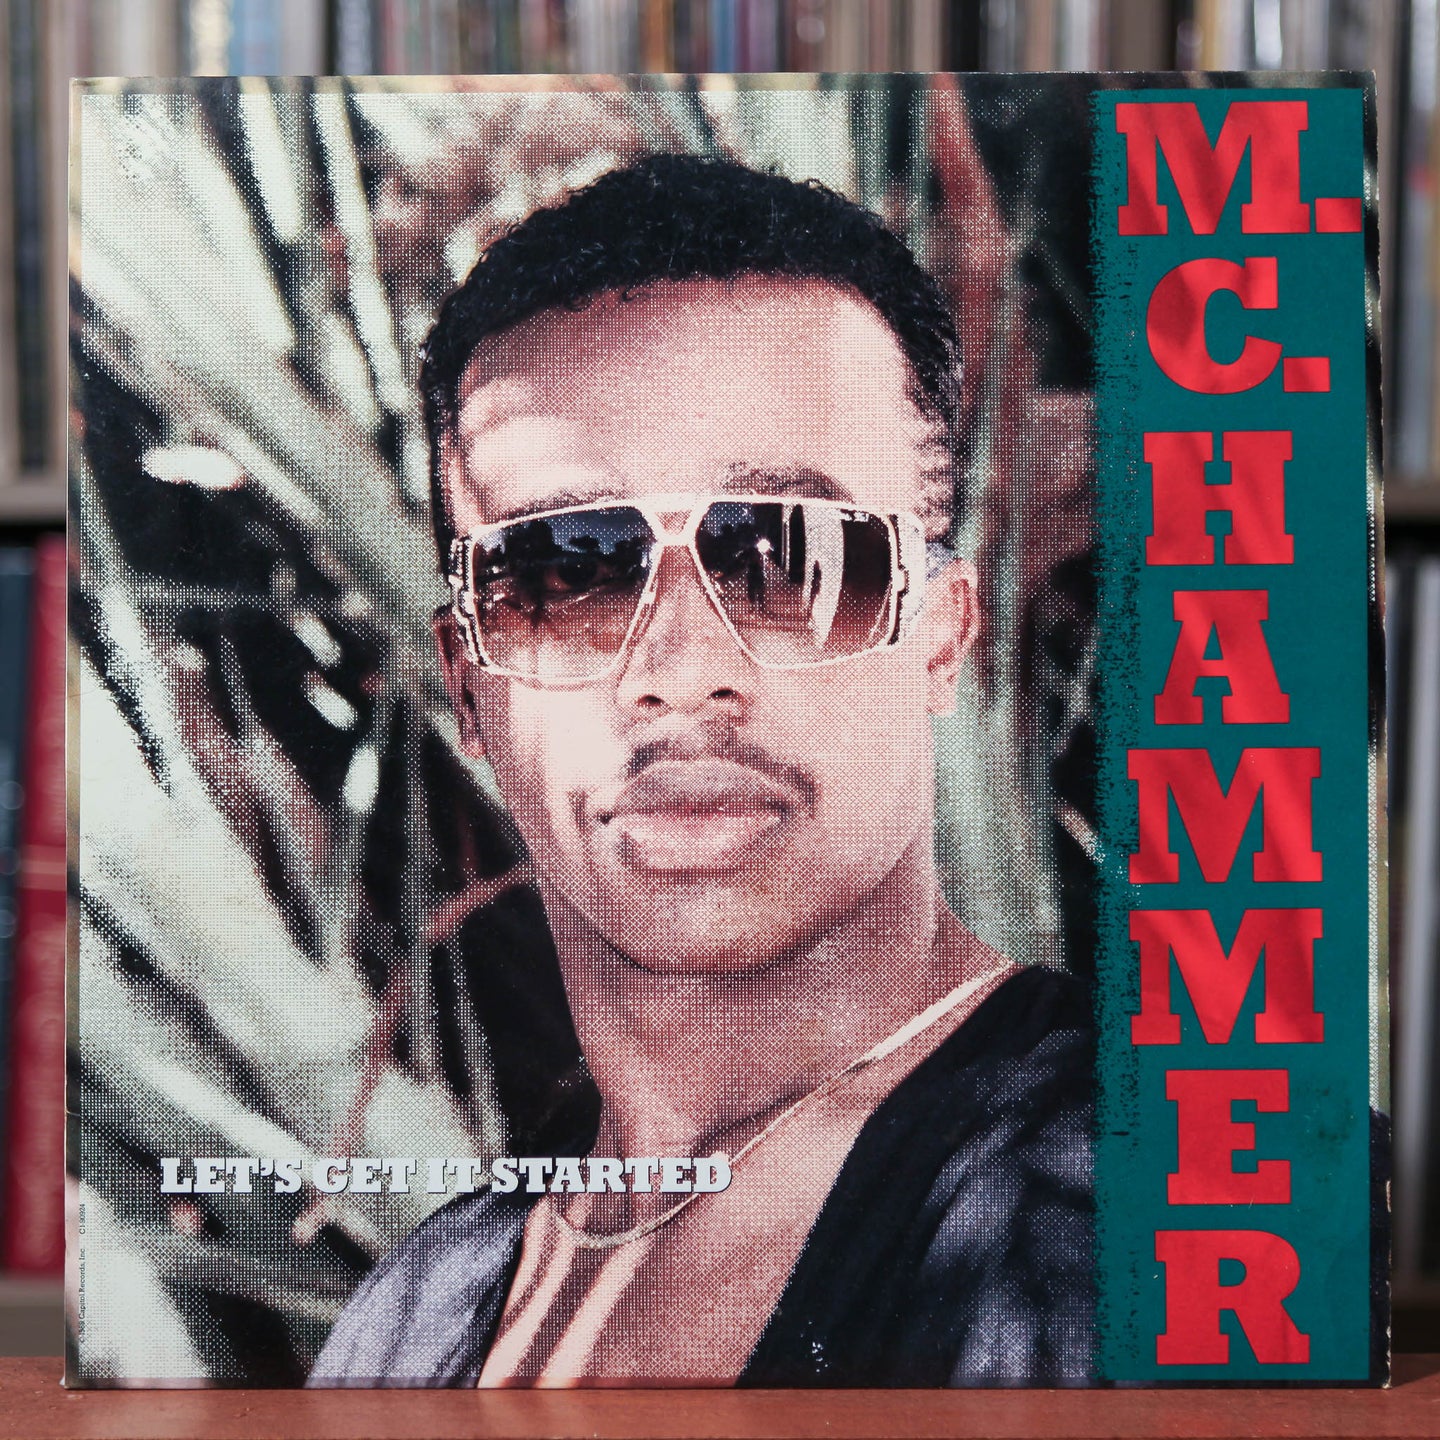 M.C. Hammer - Let's Get It Started - 1988 Capitol, EX/EX